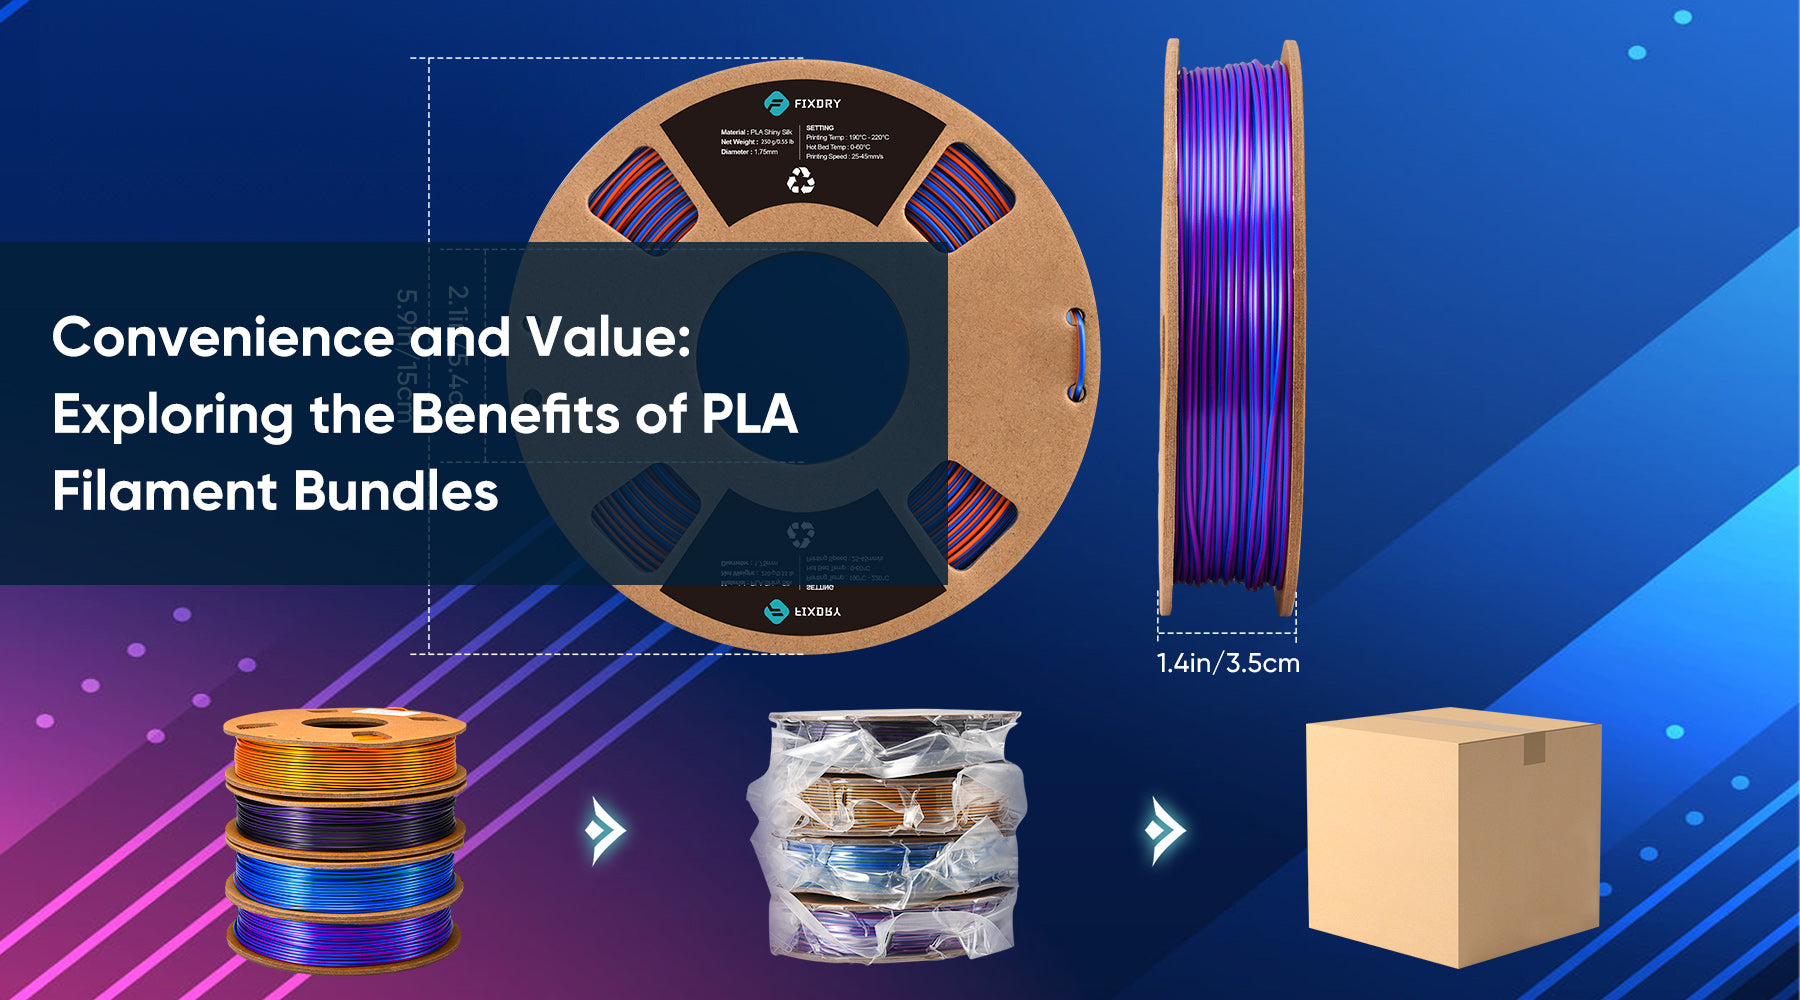 Convenience and Value: Exploring the Benefits of PLA Filament Bundles